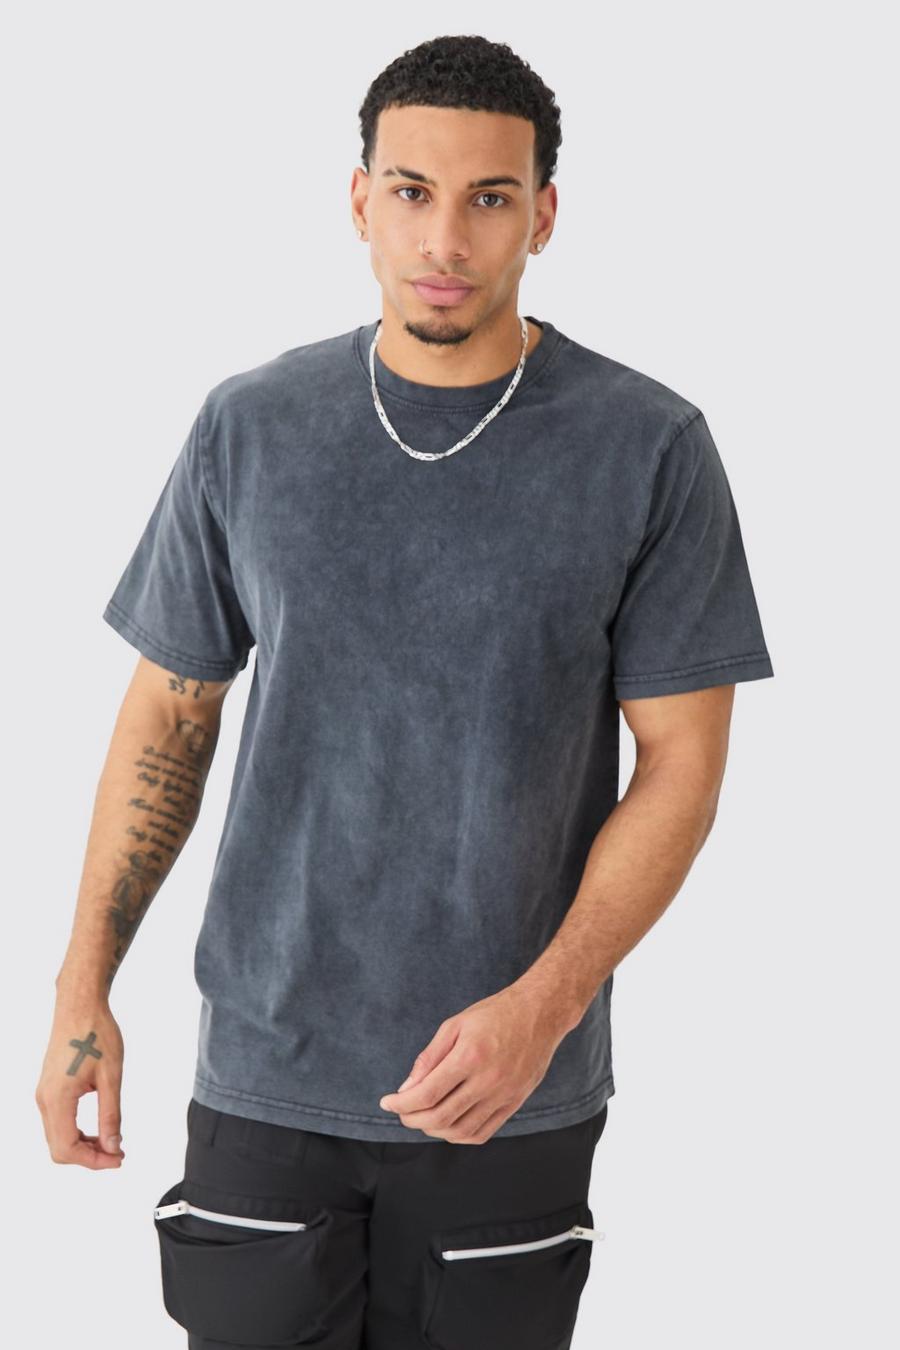 Charcoal grey Acid Wash Crew Neck T-shirt